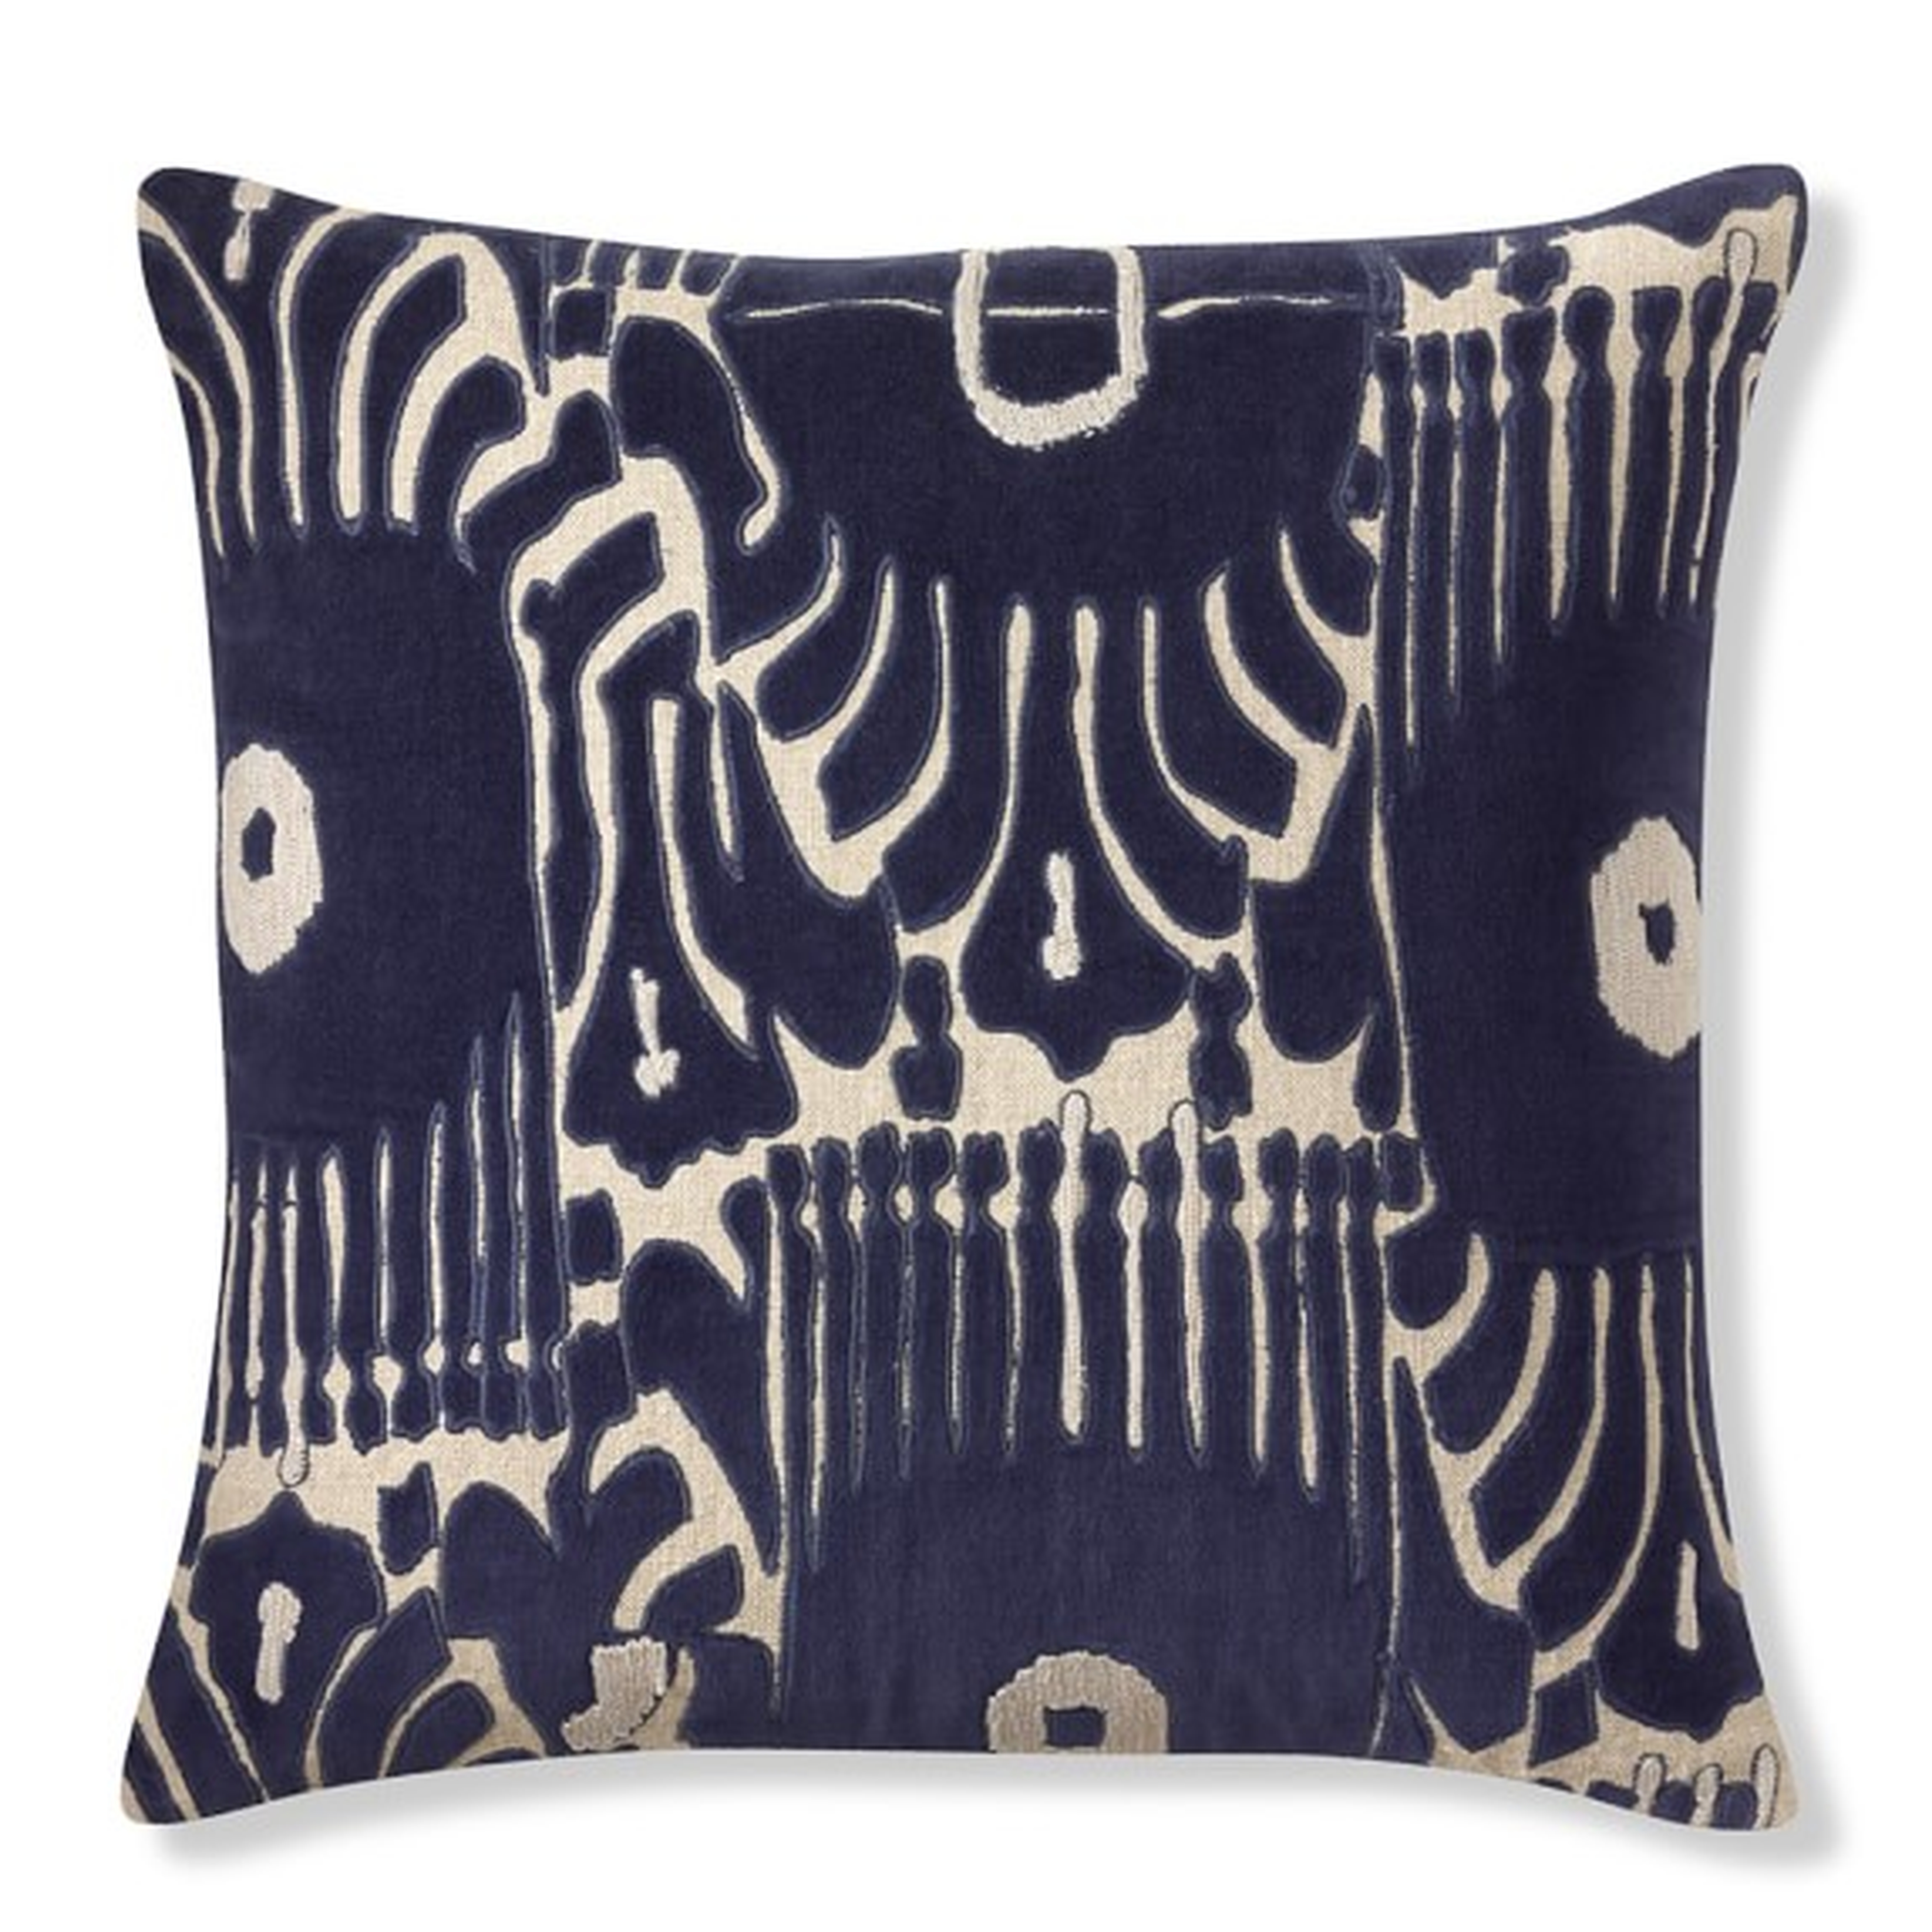 Velvet Ikat Applique Pillow Cover, Navy/Natural - Williams Sonoma Home